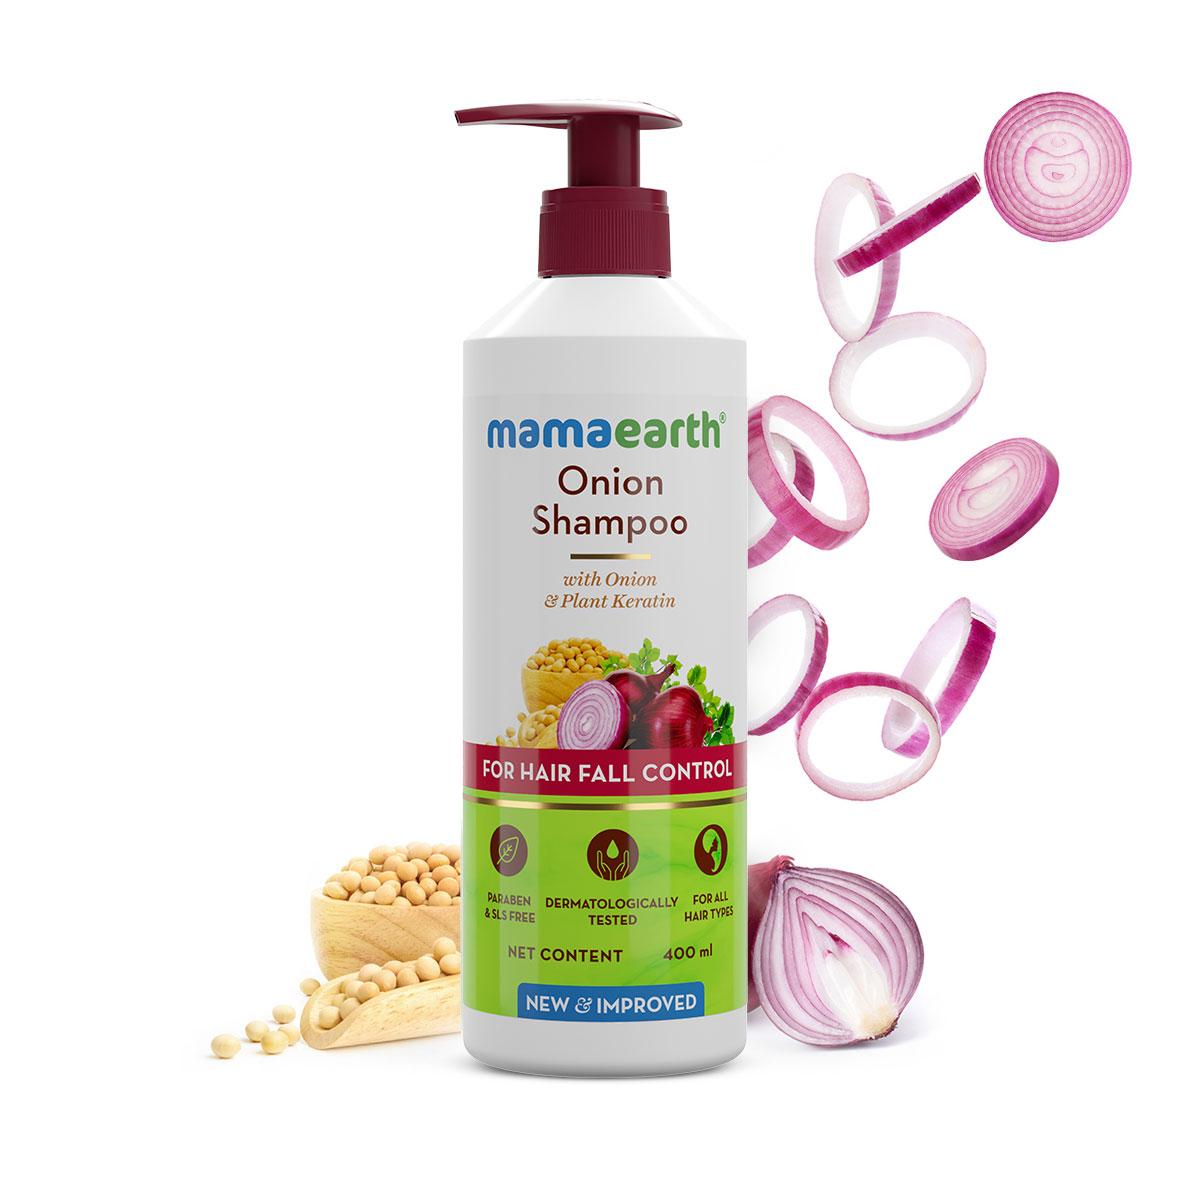 onion shampoo with onion & plant keratin for hair fall control - 400ml